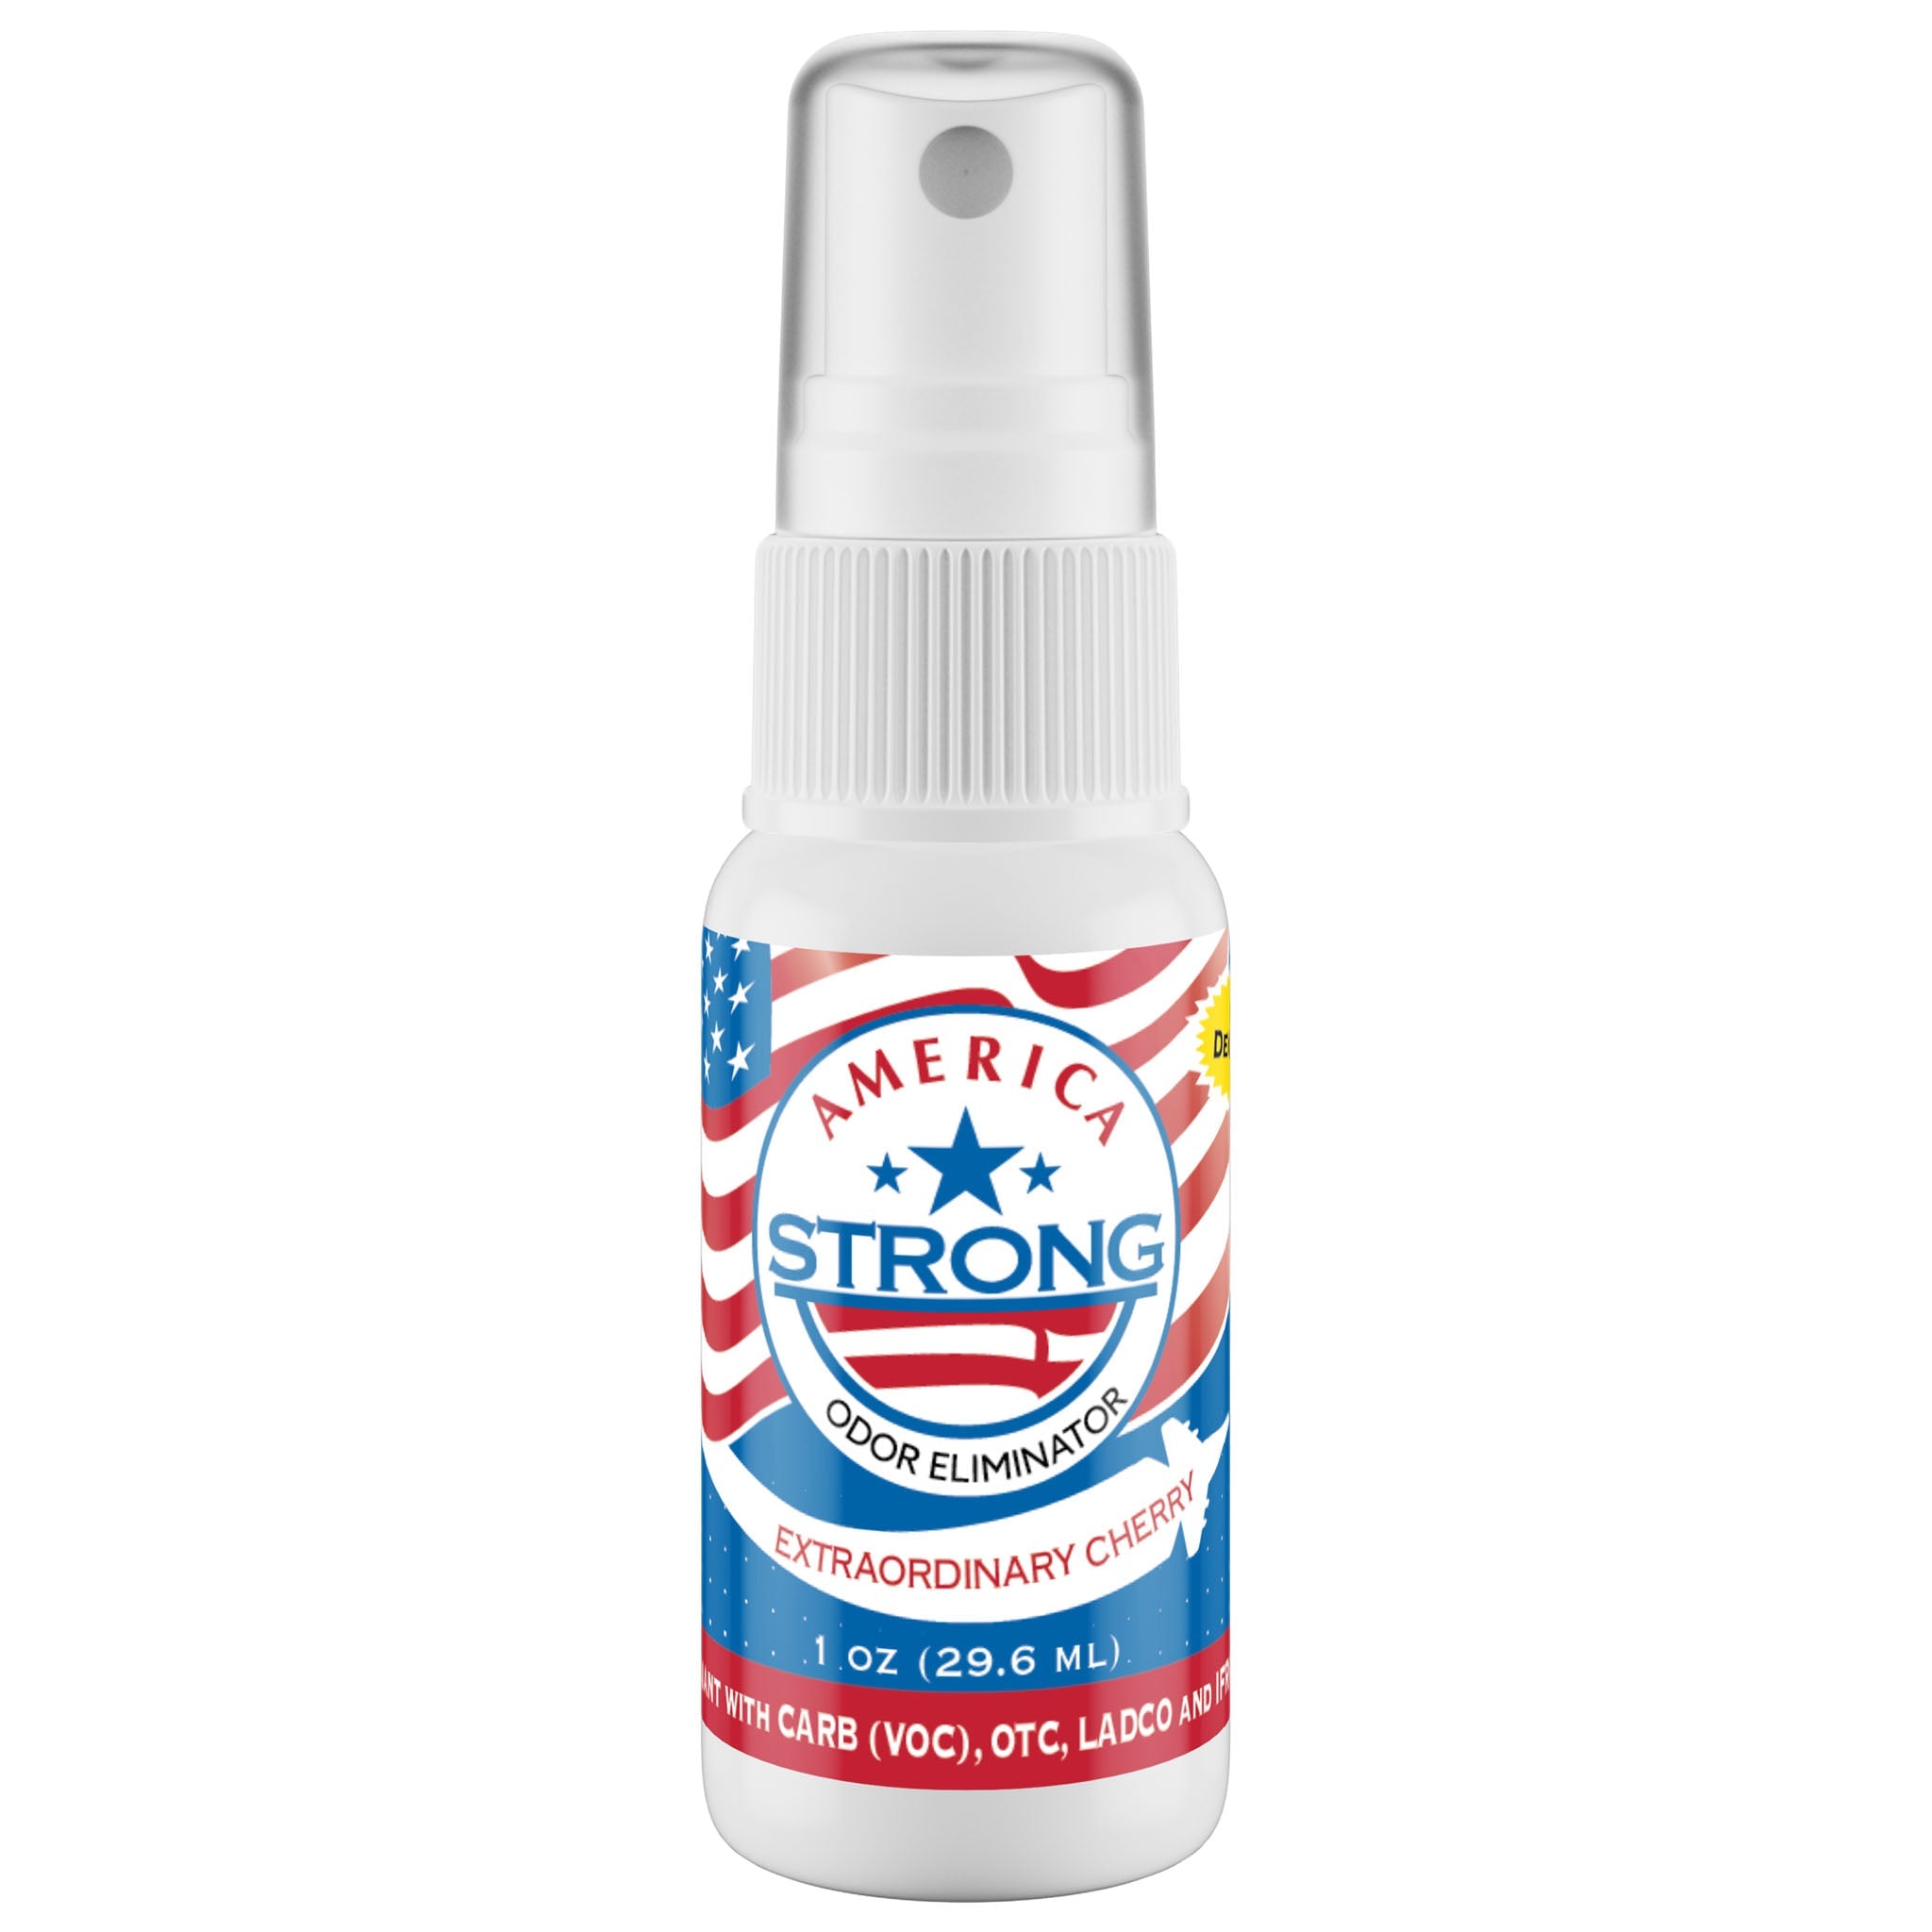 America Strong Odor Eliminator - Extraordinary Cherry Scent